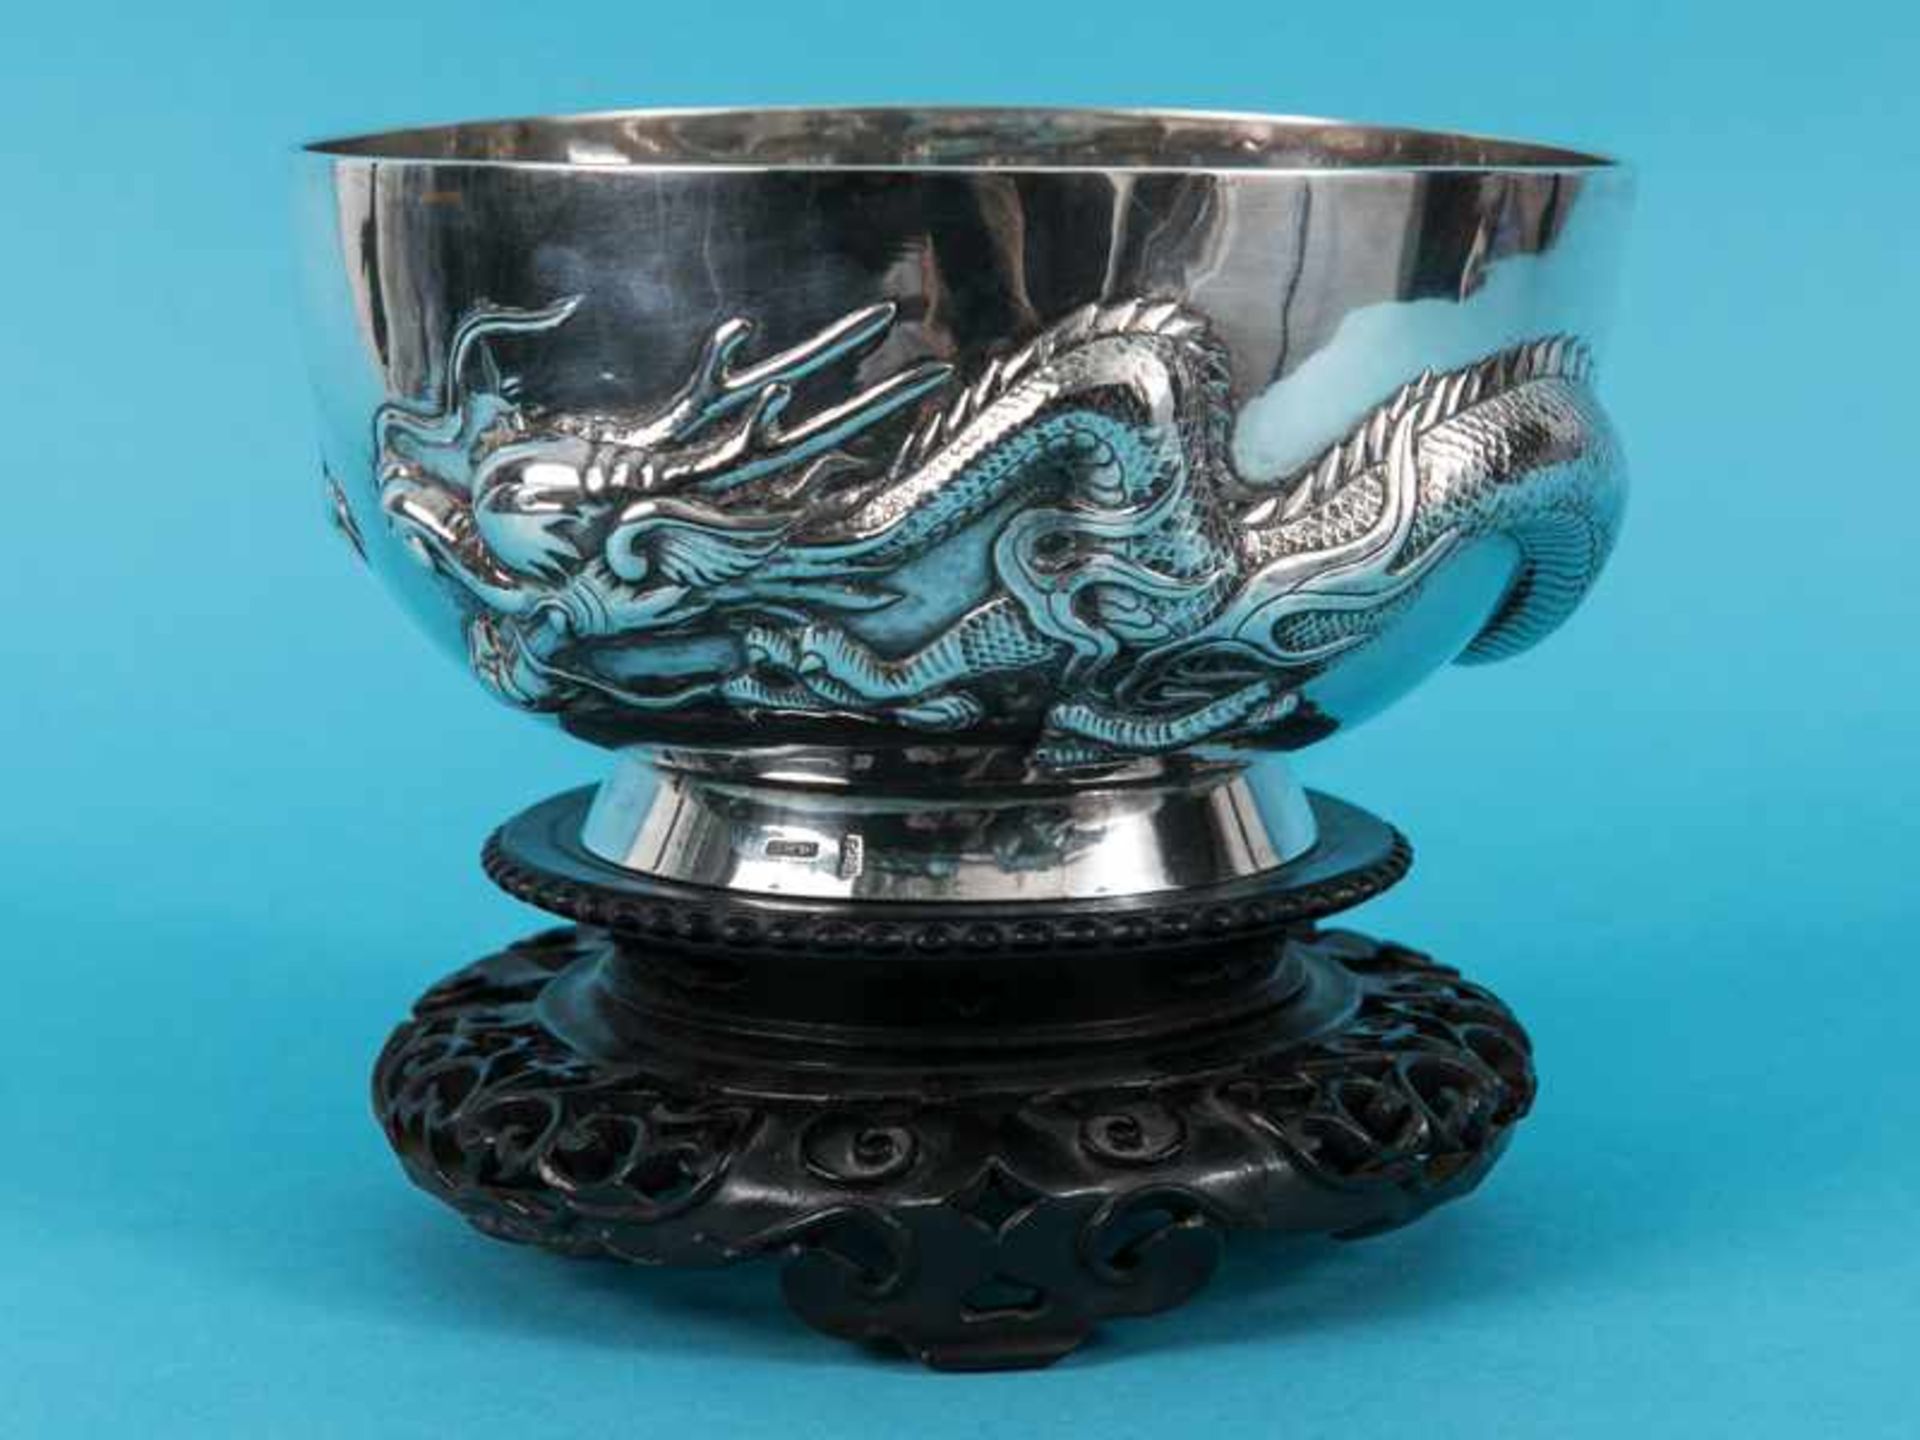 Schale mit Drachendekor (Chinese Export silver bowl), wohl Wang Hing, Hongkong, Anfang/ 1. Hälfte